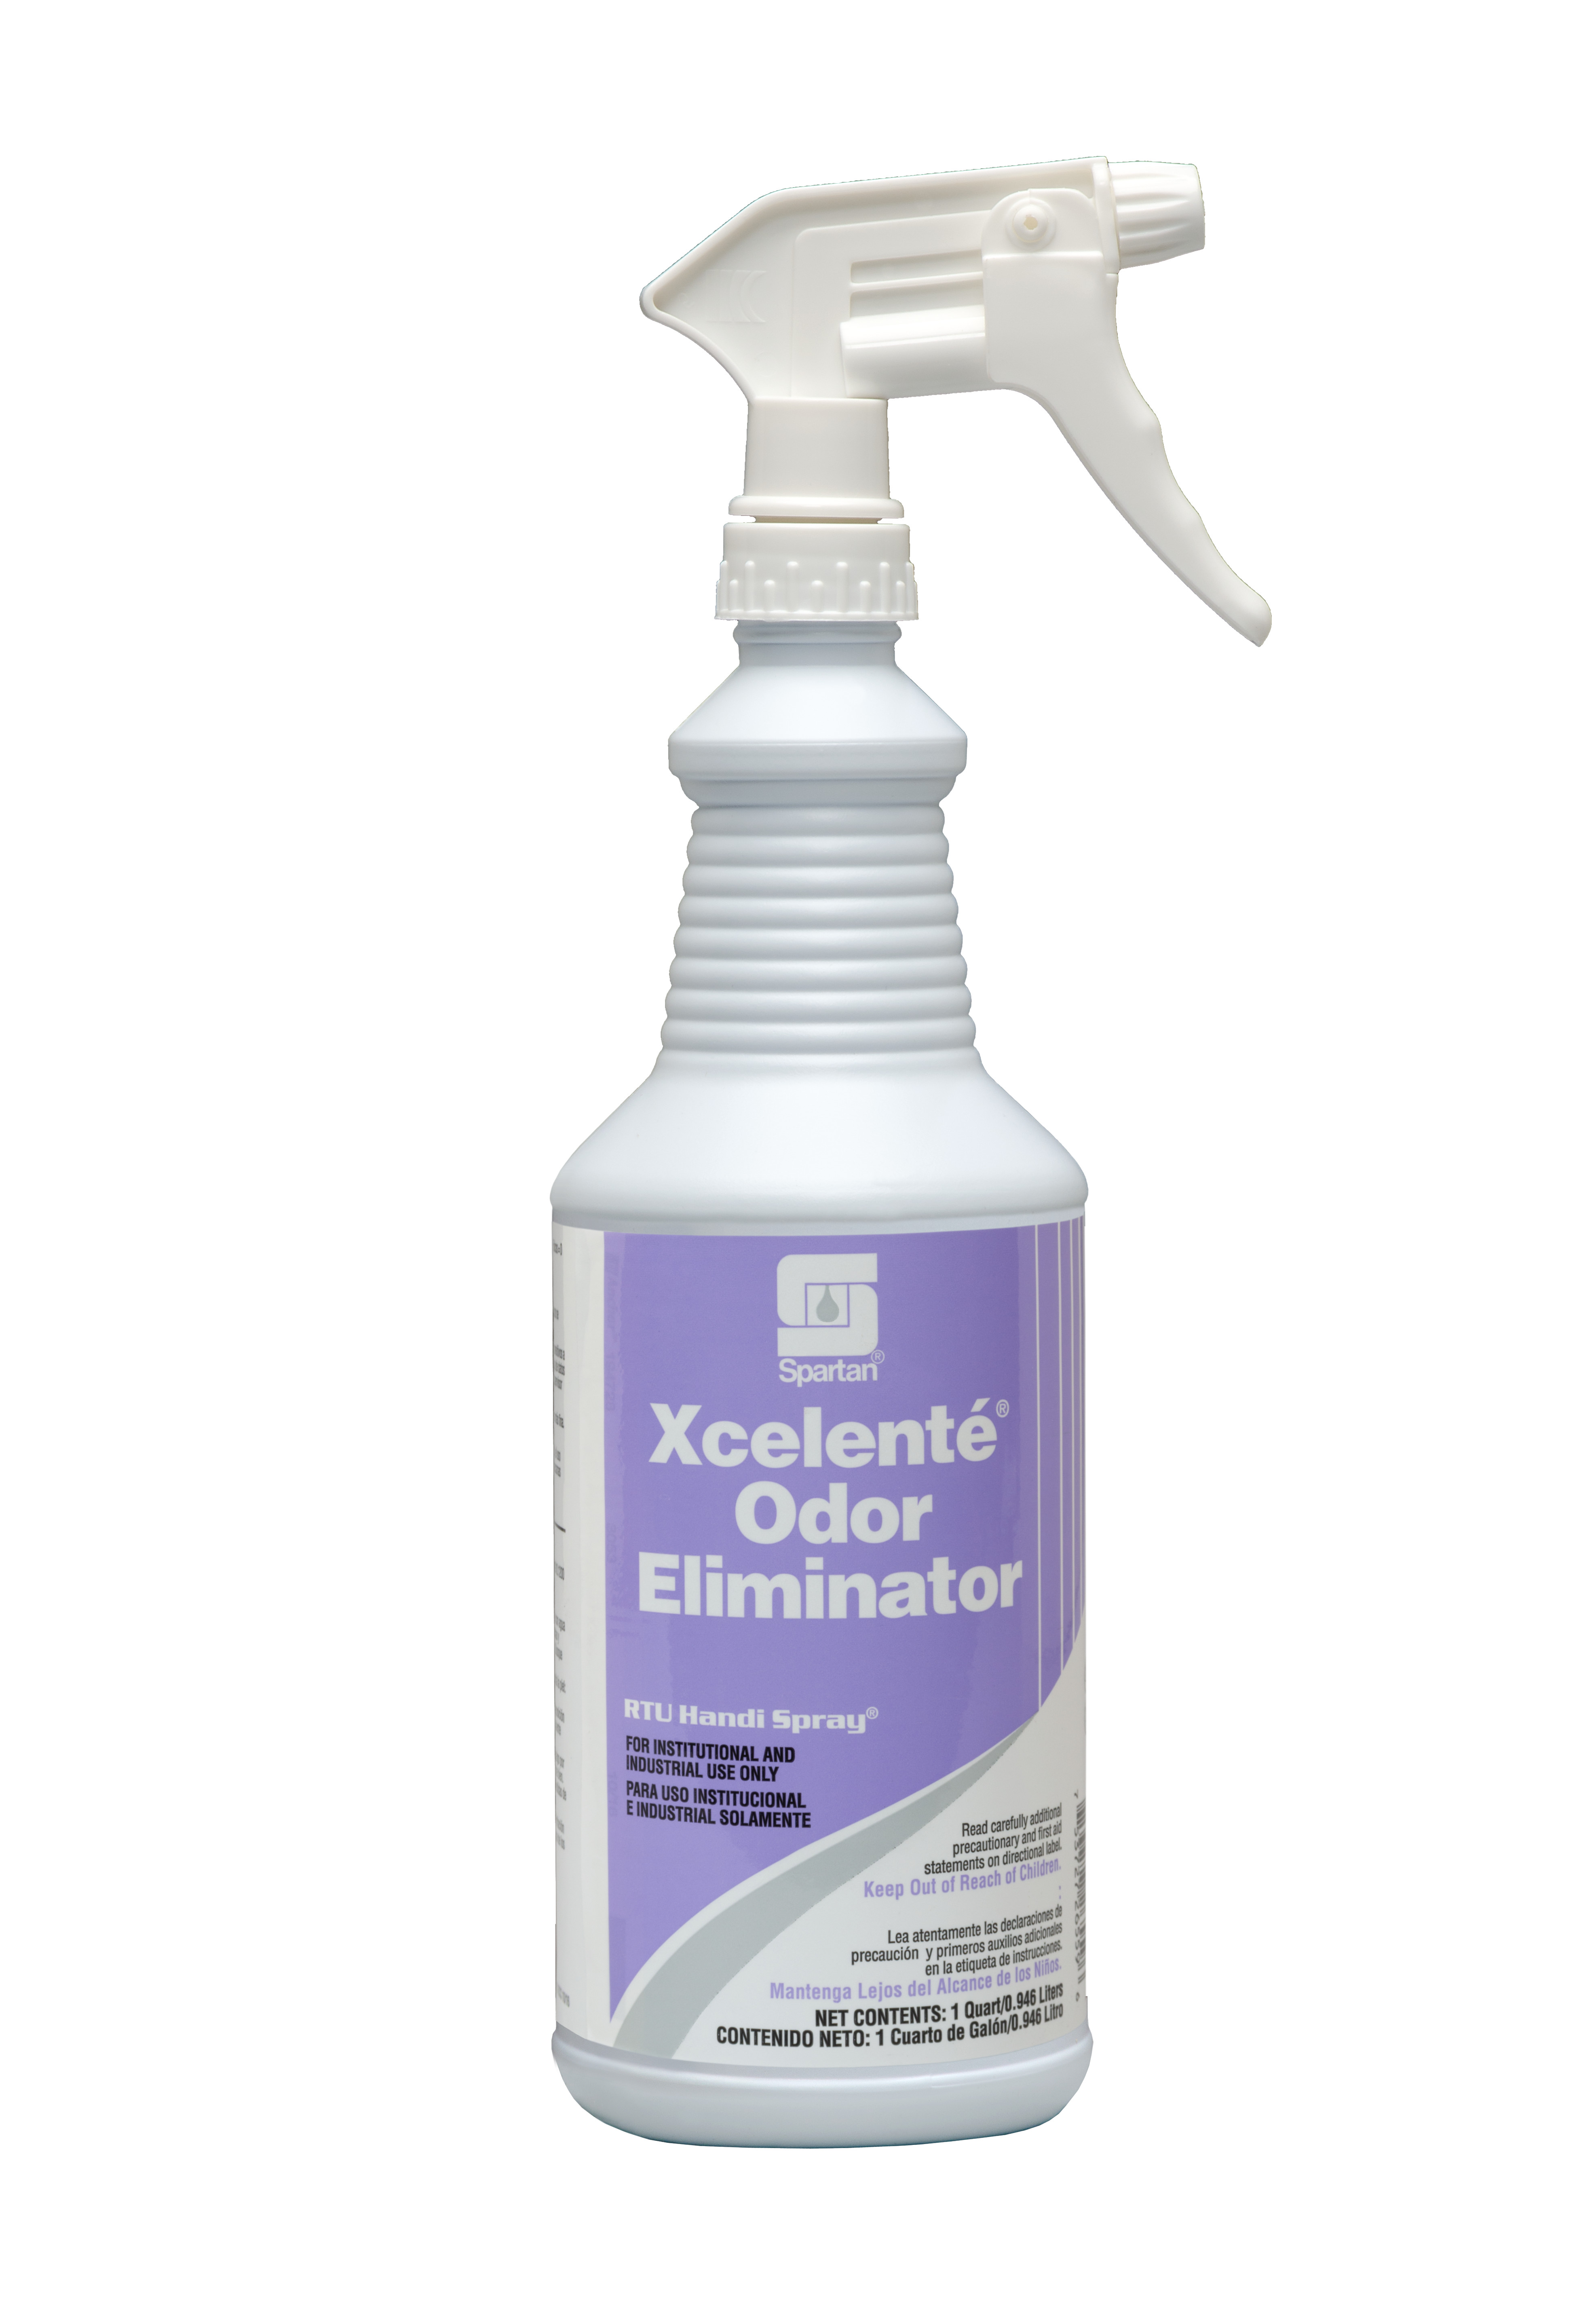 Xcelente+Odor+Eliminator+RTU+Handi+Spray+%7B1+quart+%2812+per+case%29%7D